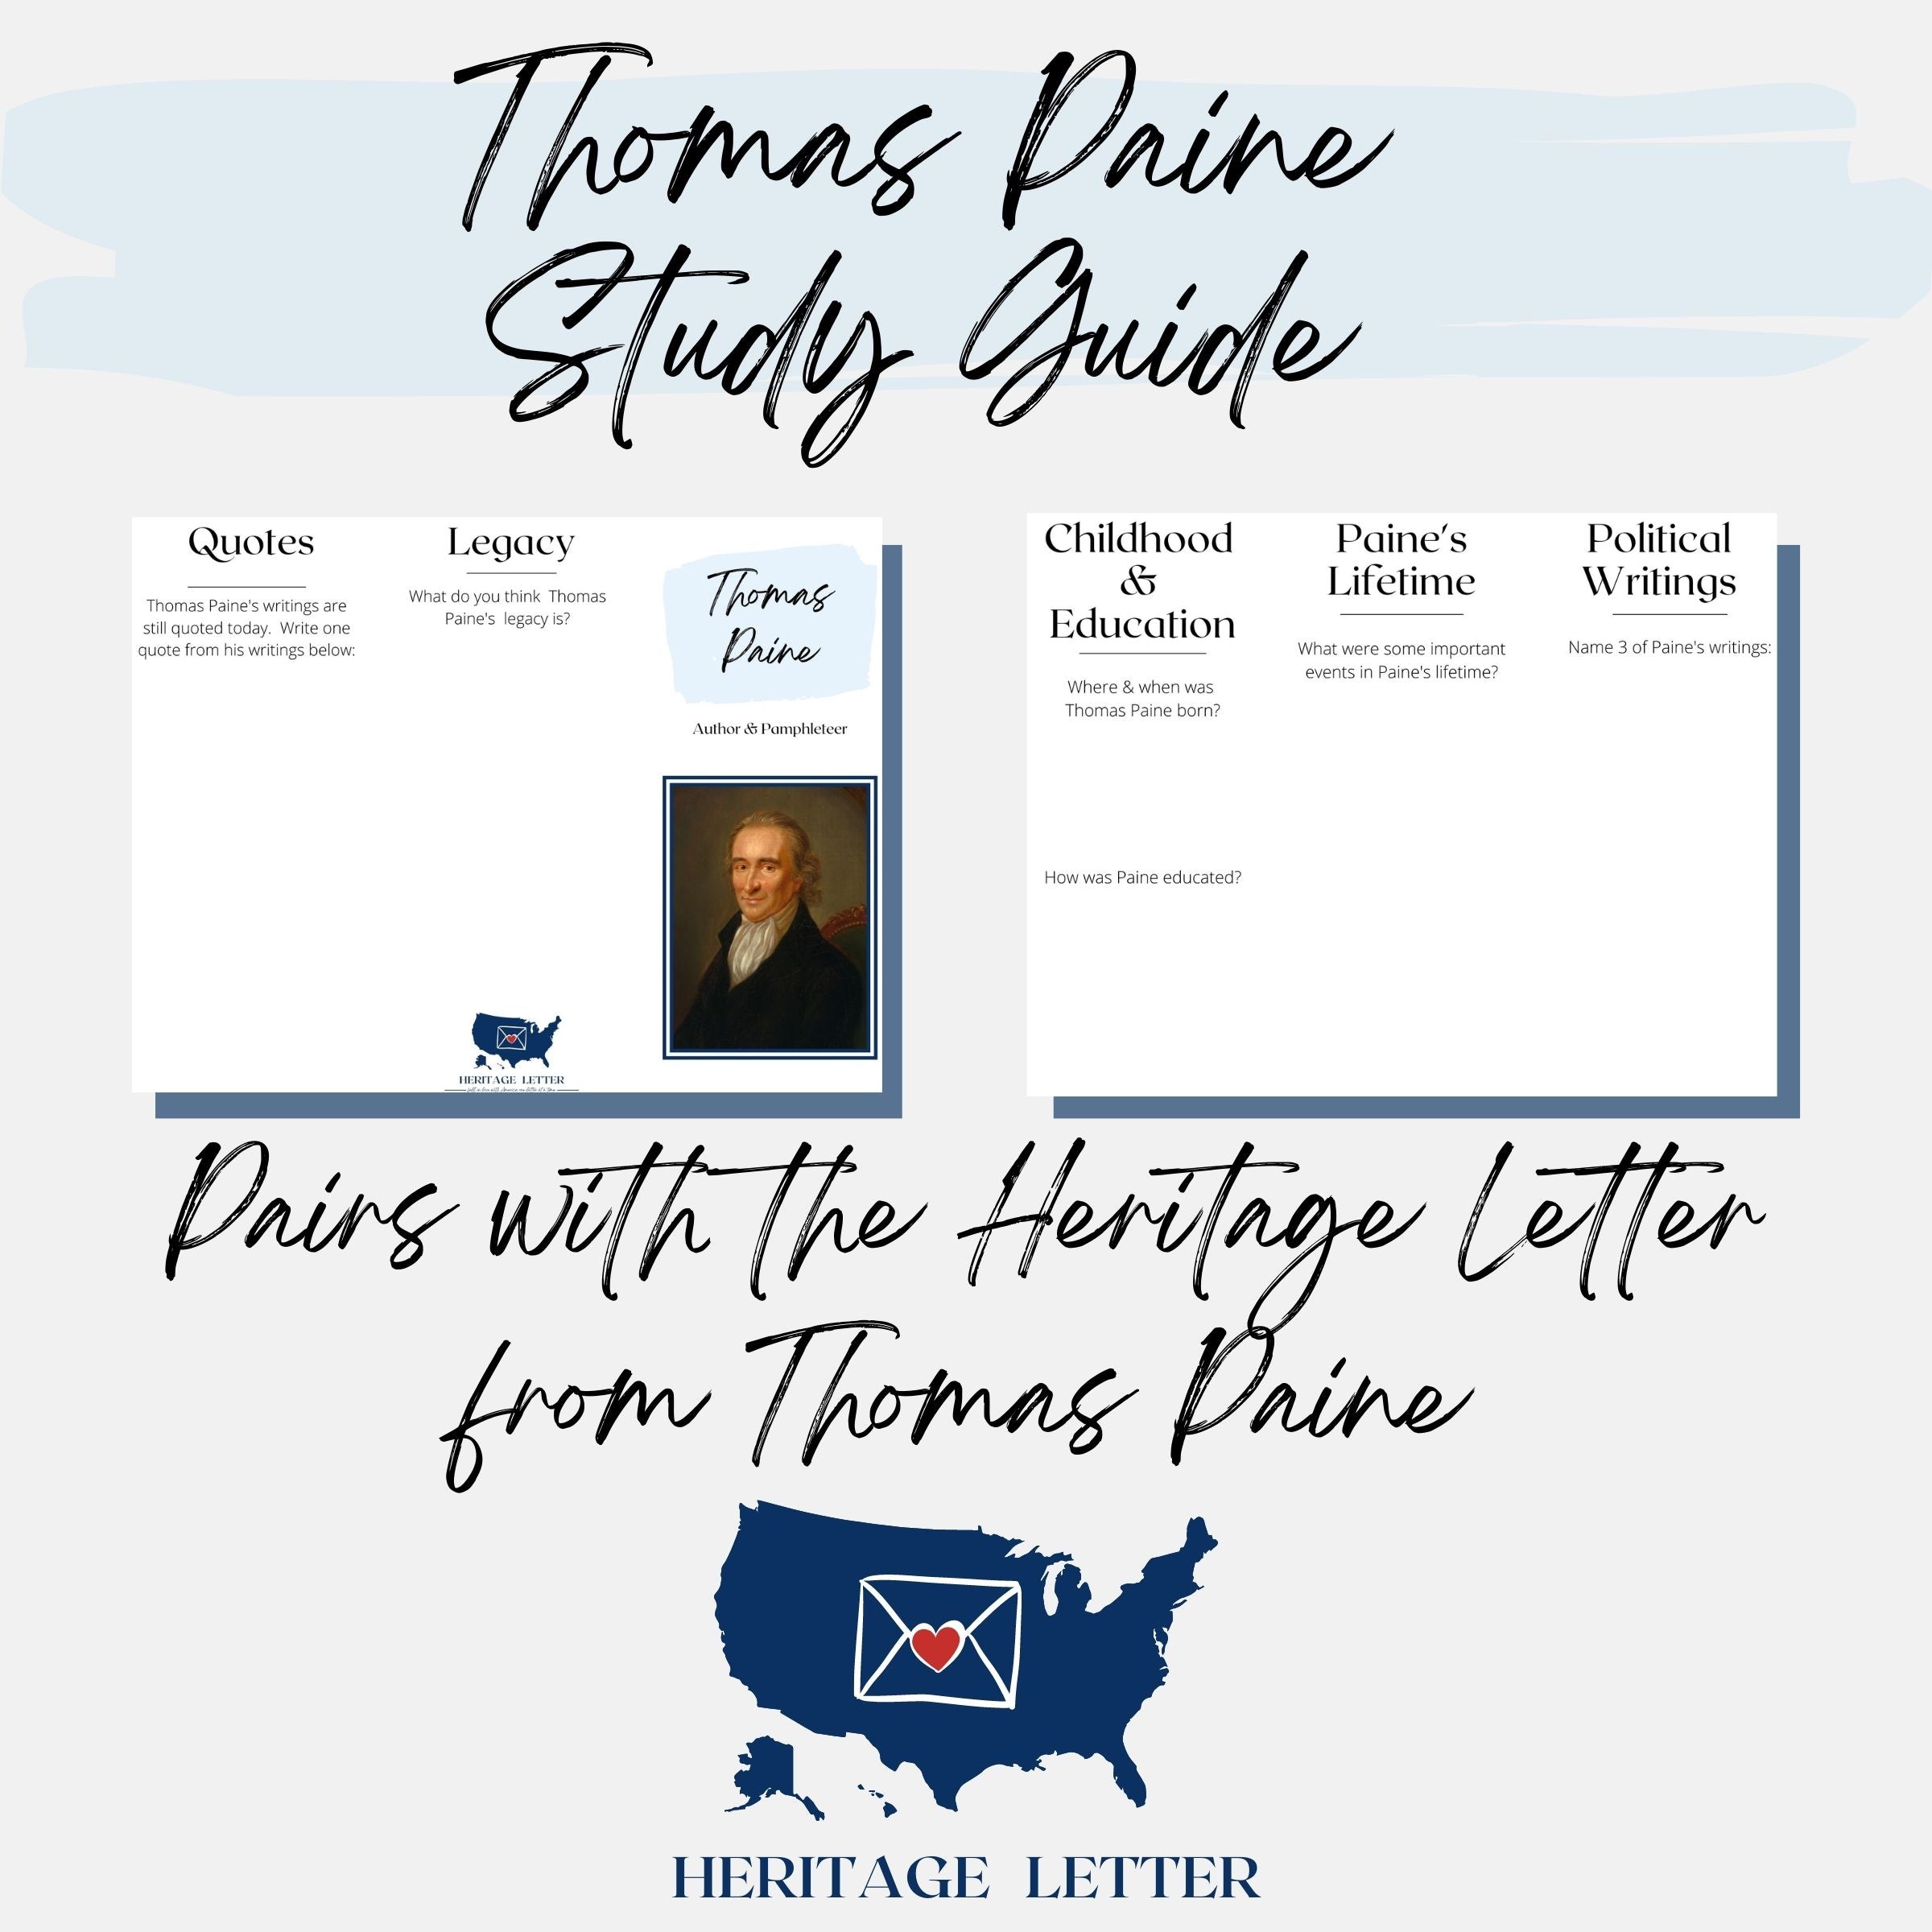 Thomas Paine Study Guide